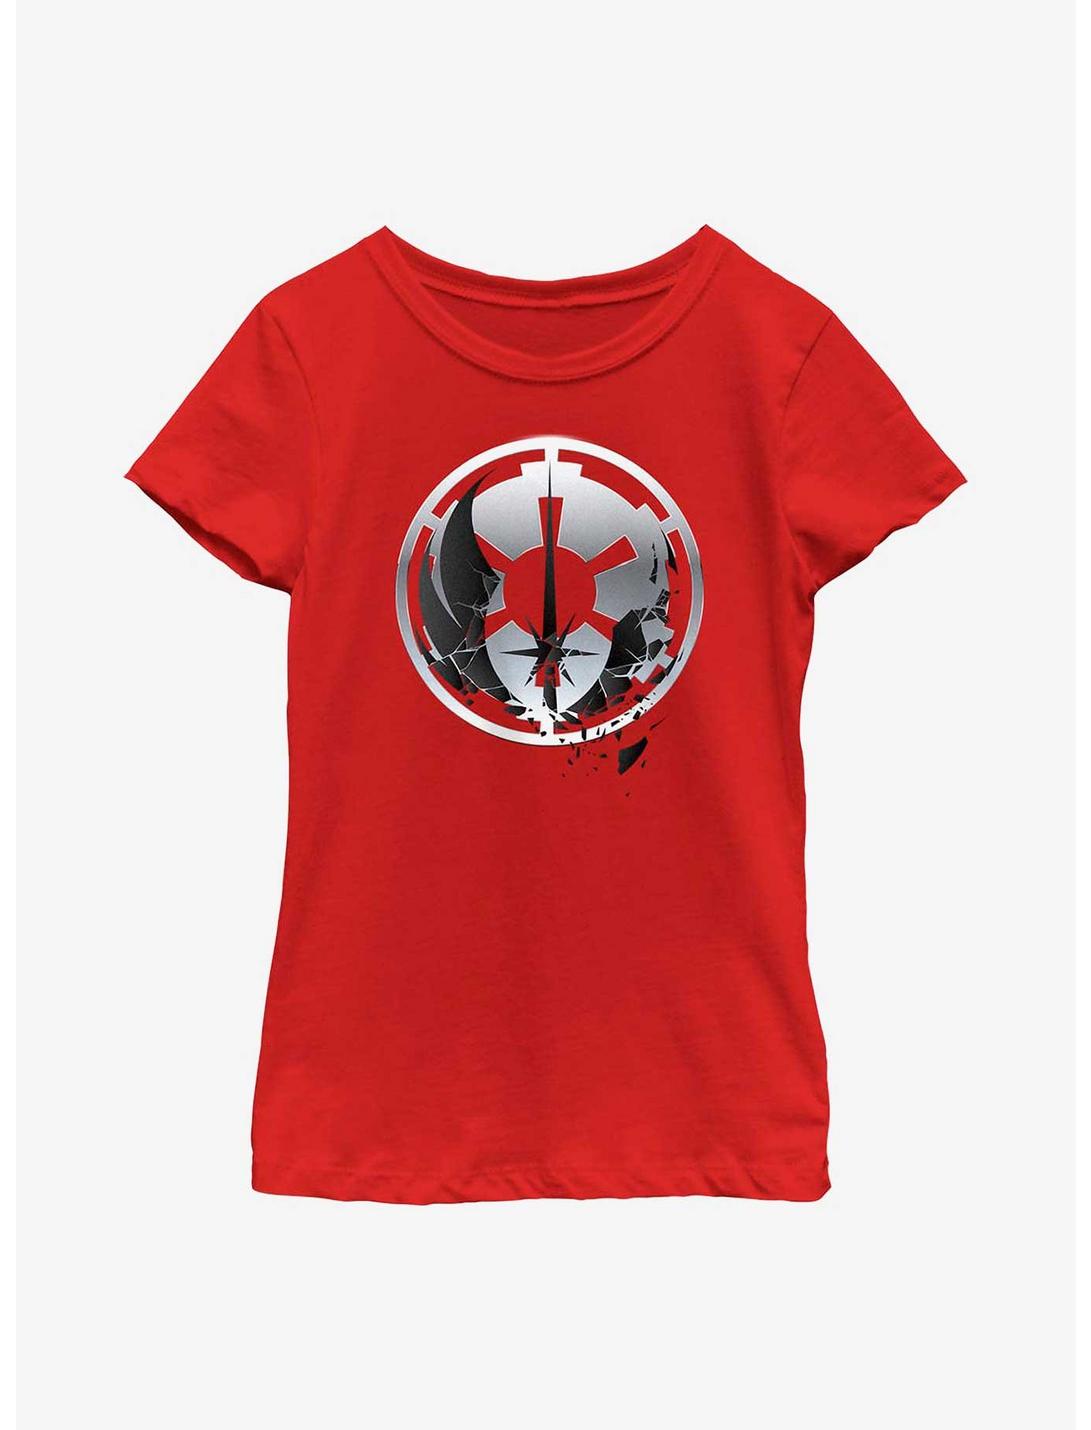 Star Wars Obi-Wan Kenobi Jedi To Empire Logo Youth Girls T-Shirt, RED, hi-res